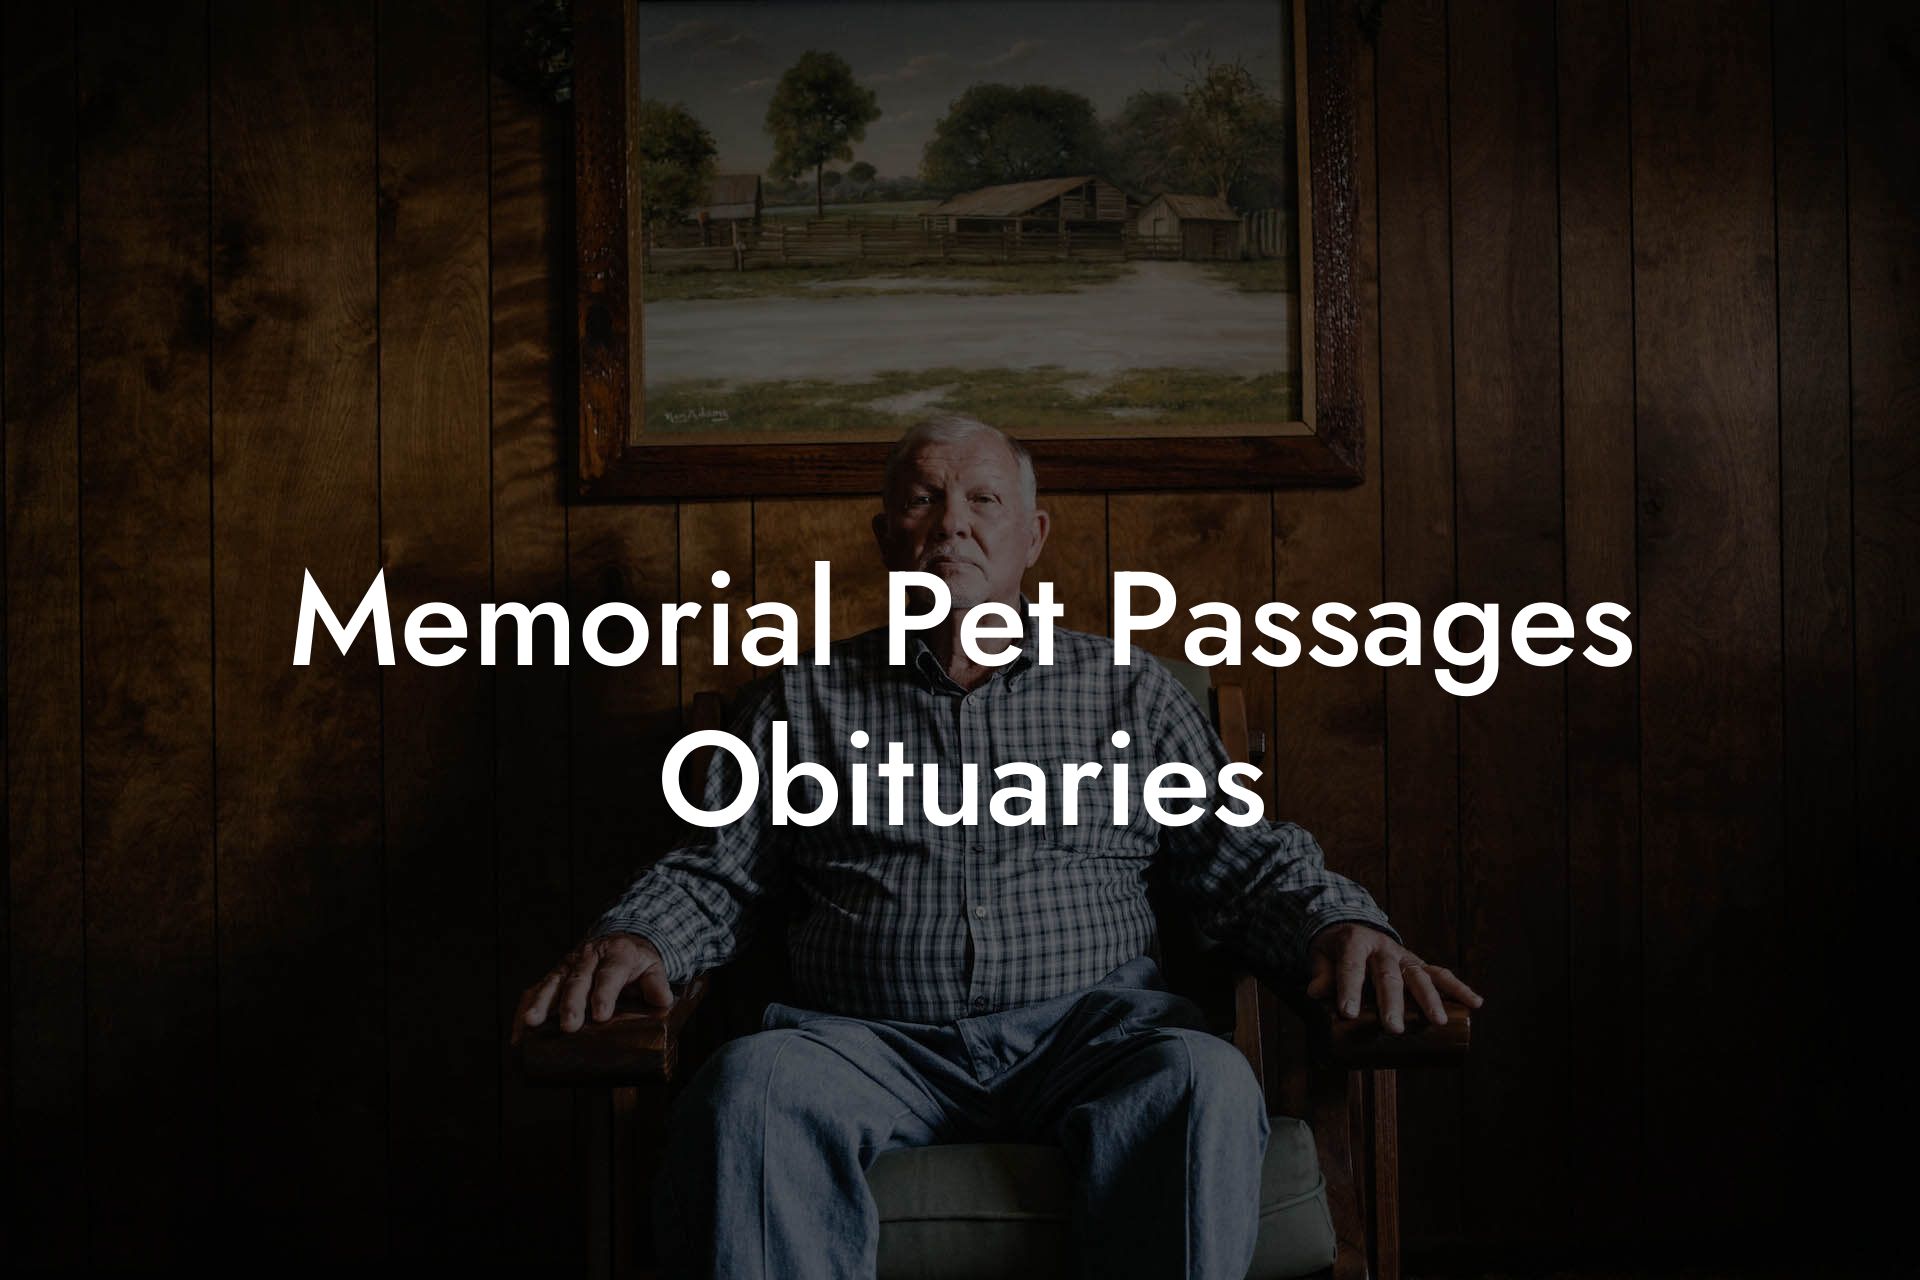 Memorial Pet Passages Obituaries